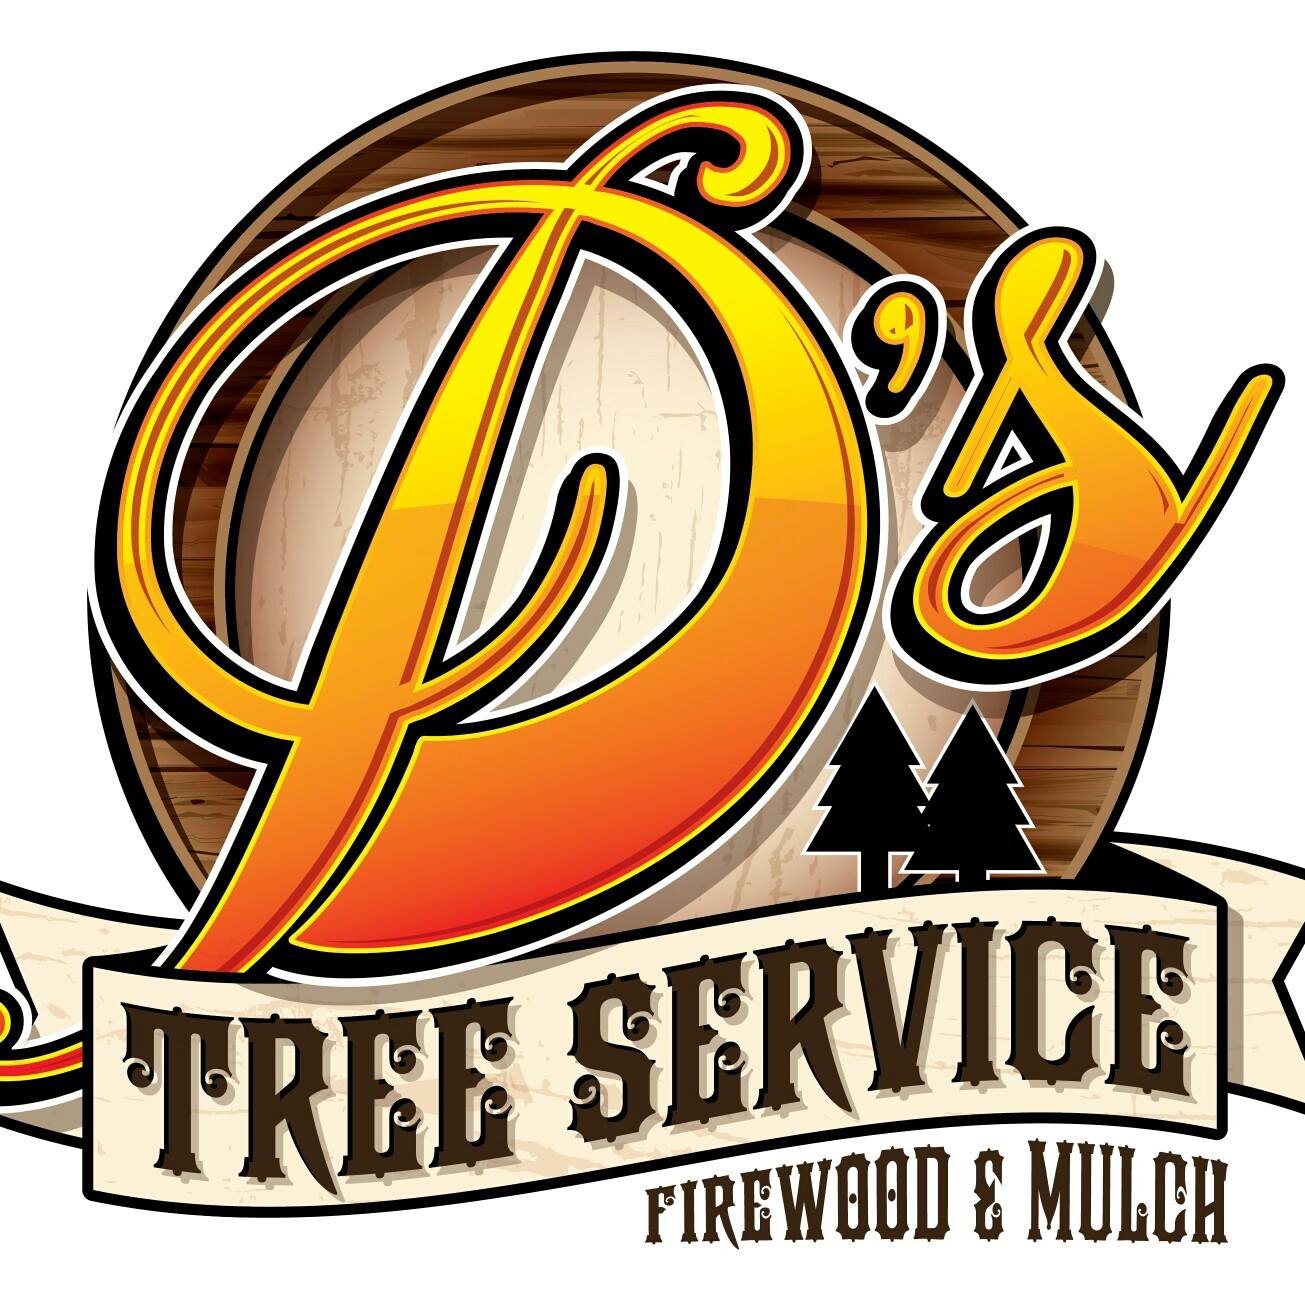 D's Firewood & Mulch 2319 Pcr 704, Perryville Missouri 63775